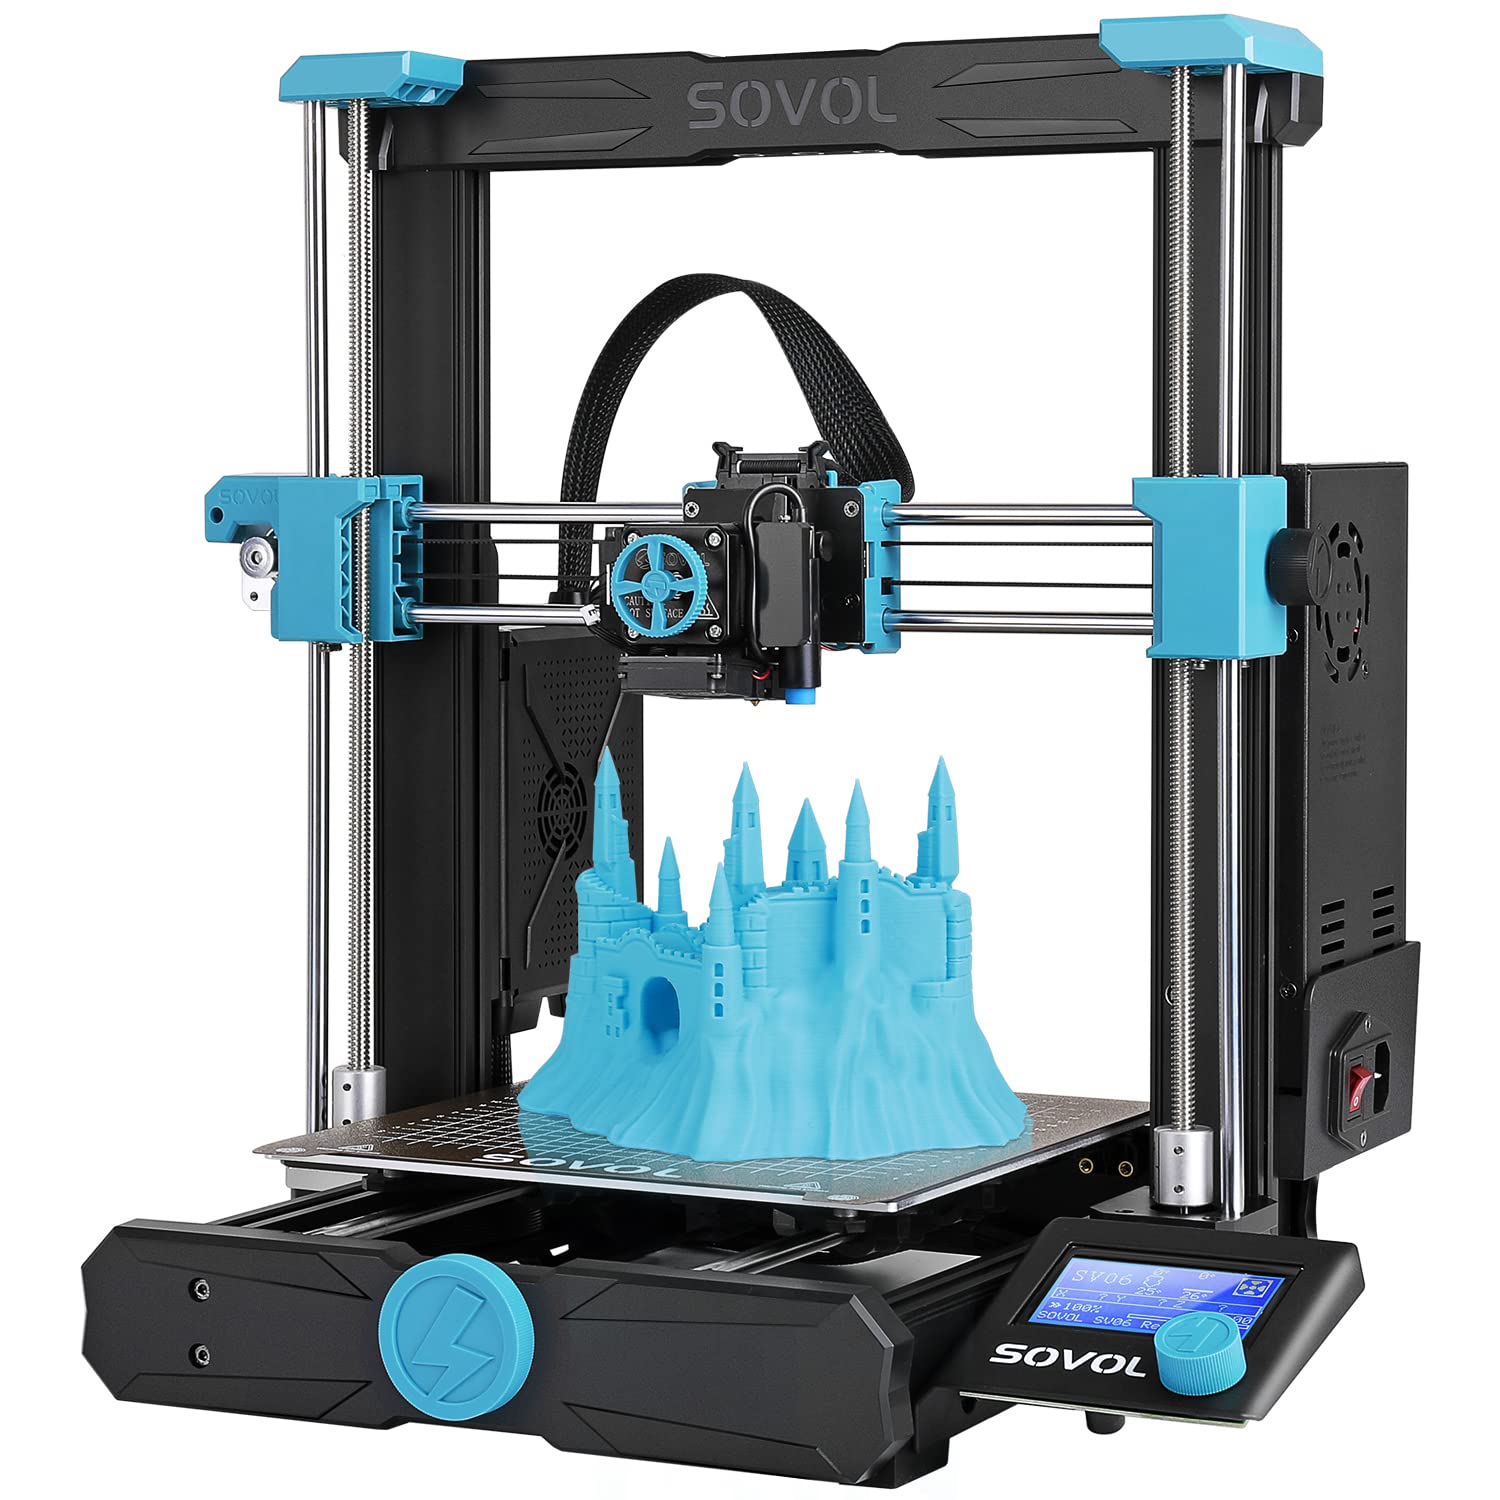 Impressora 3D Sovol SV06